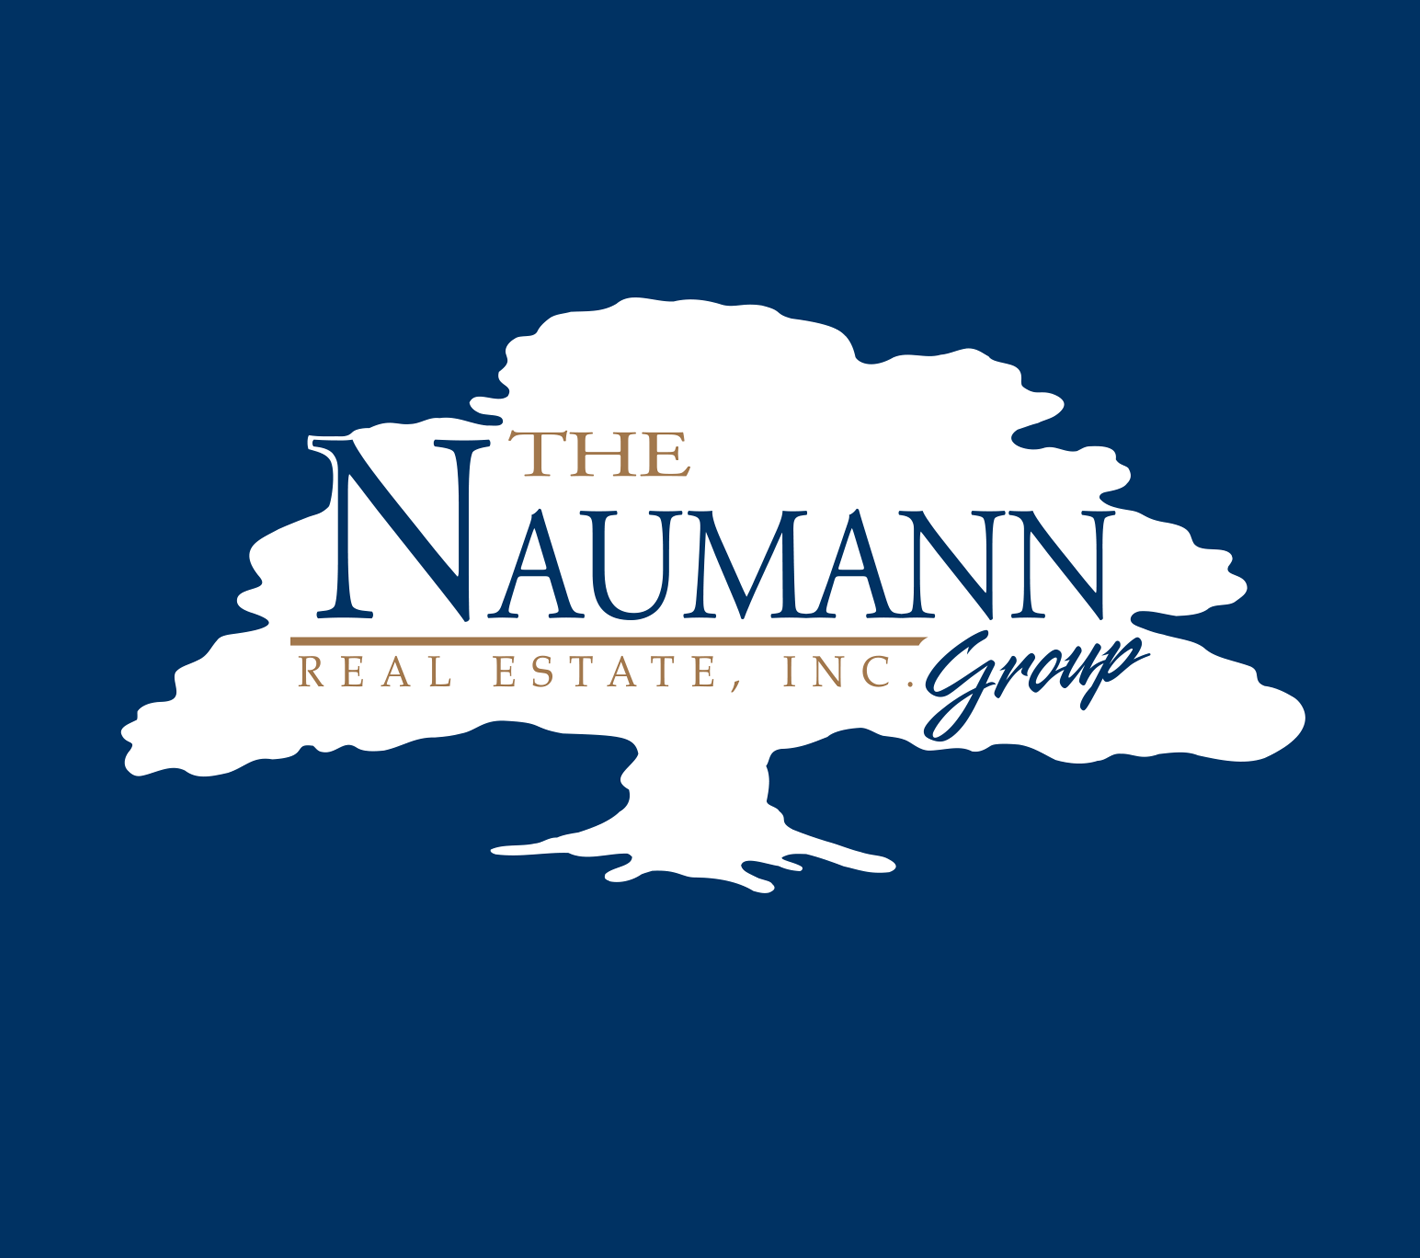 The Naumann Group Real Estate, Inc.